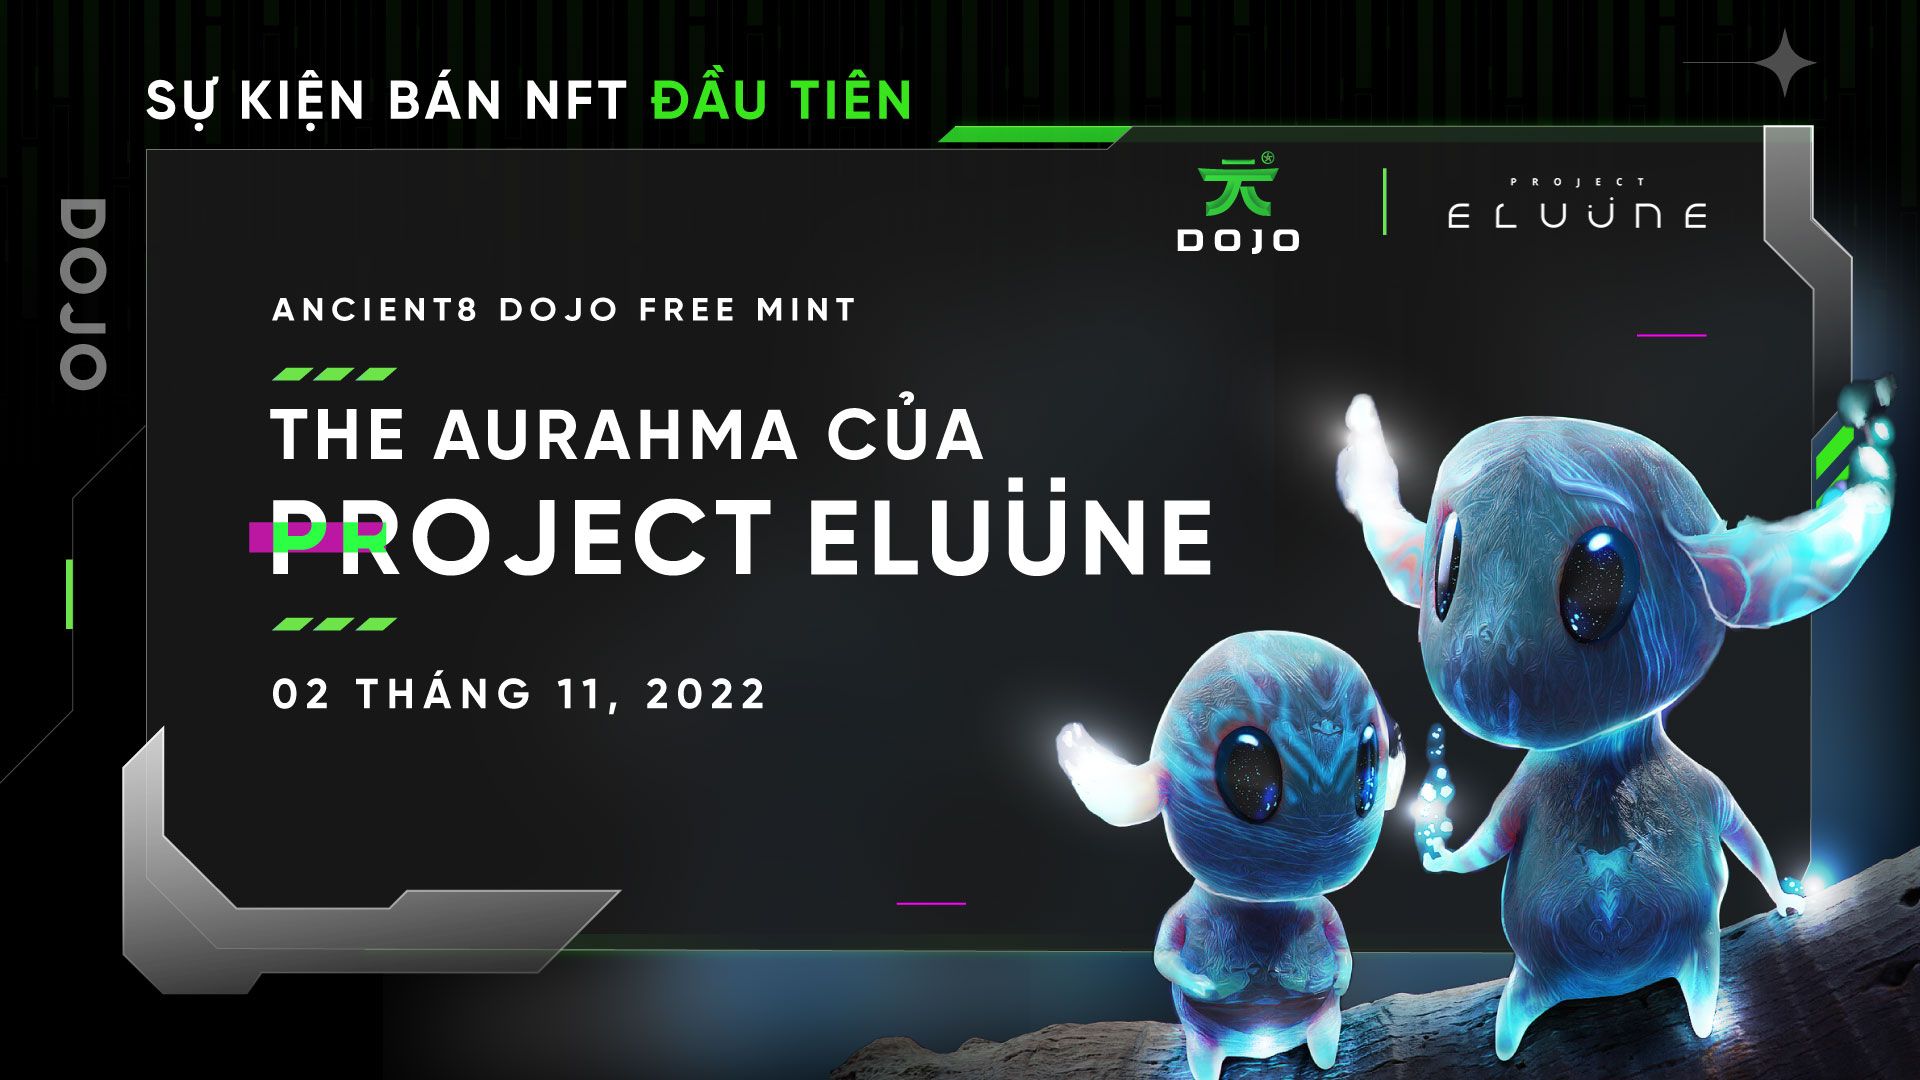 Ancient8 Dojo x Project Eluüne: Free Mint NFT Aurahma